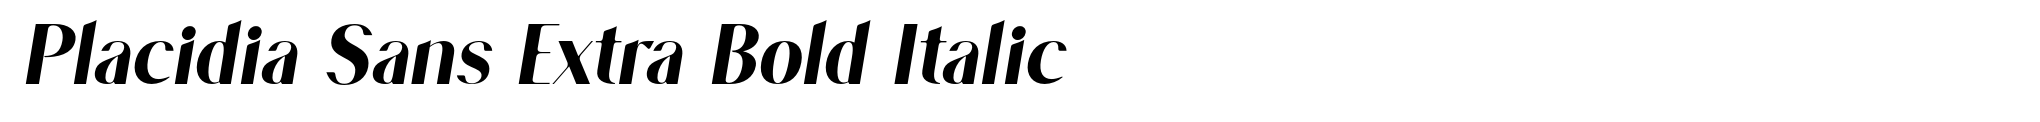 Placidia Sans Extra Bold Italic image